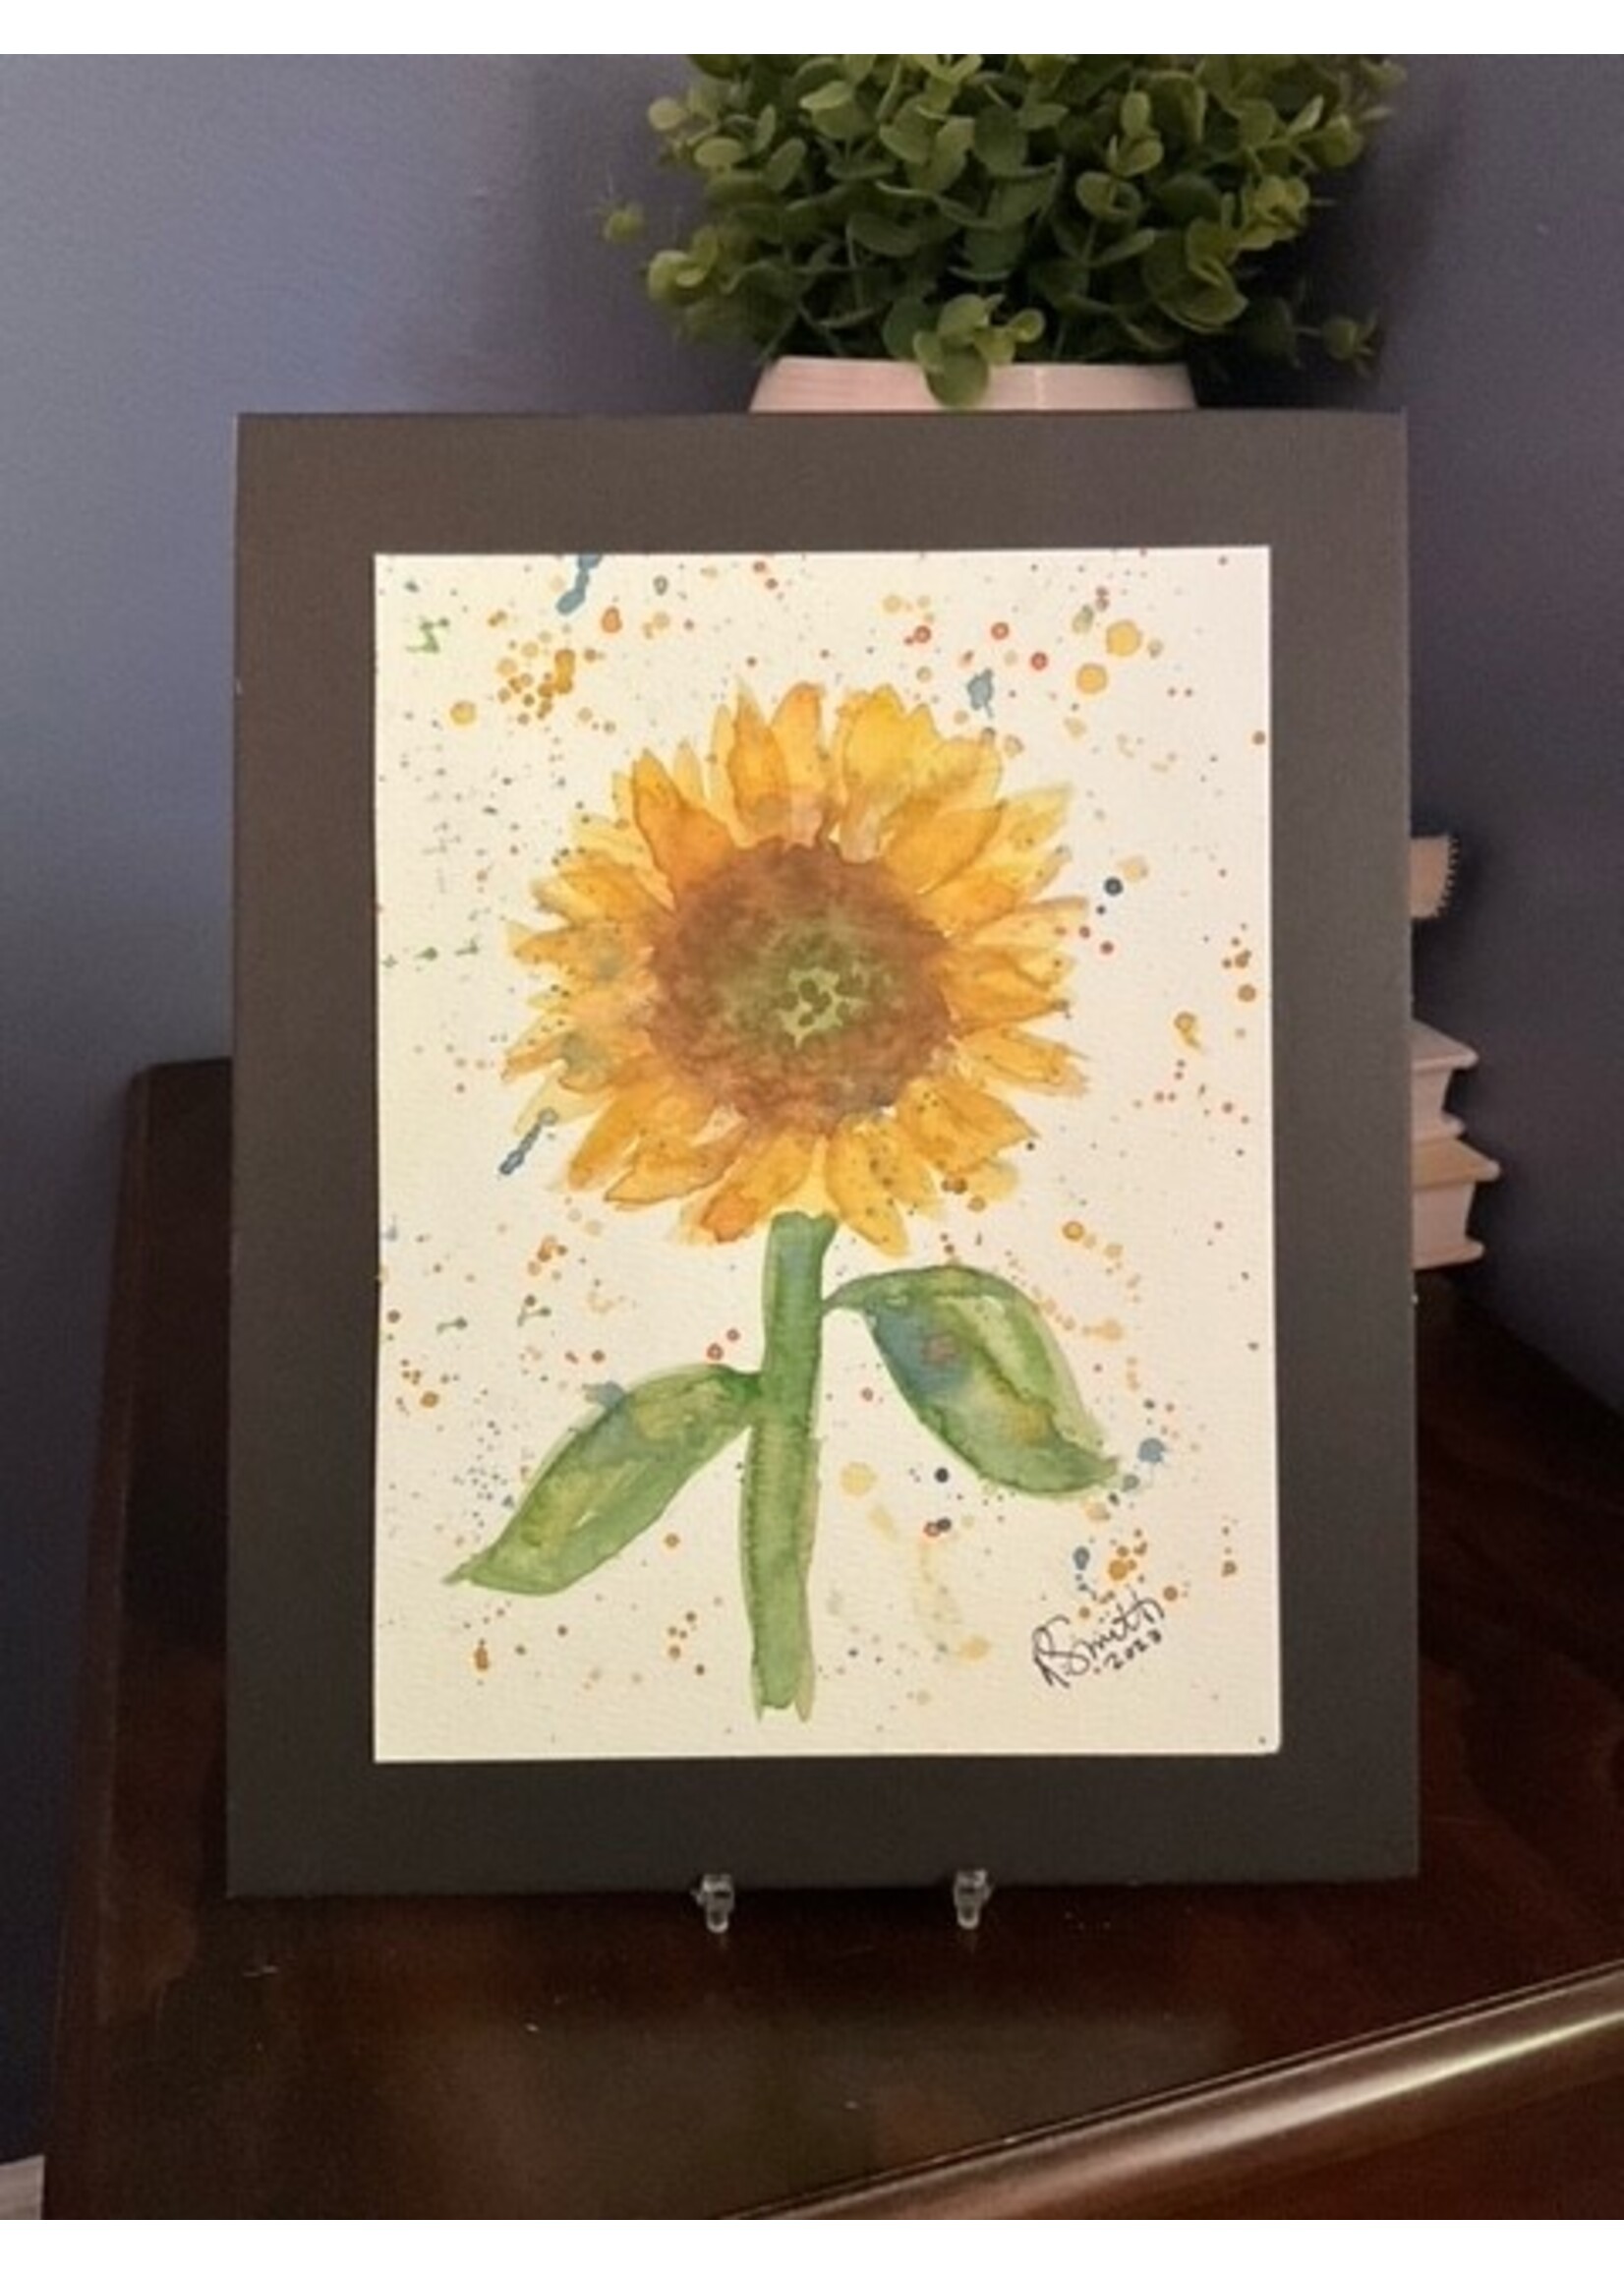 #06 8x10 Sunflower